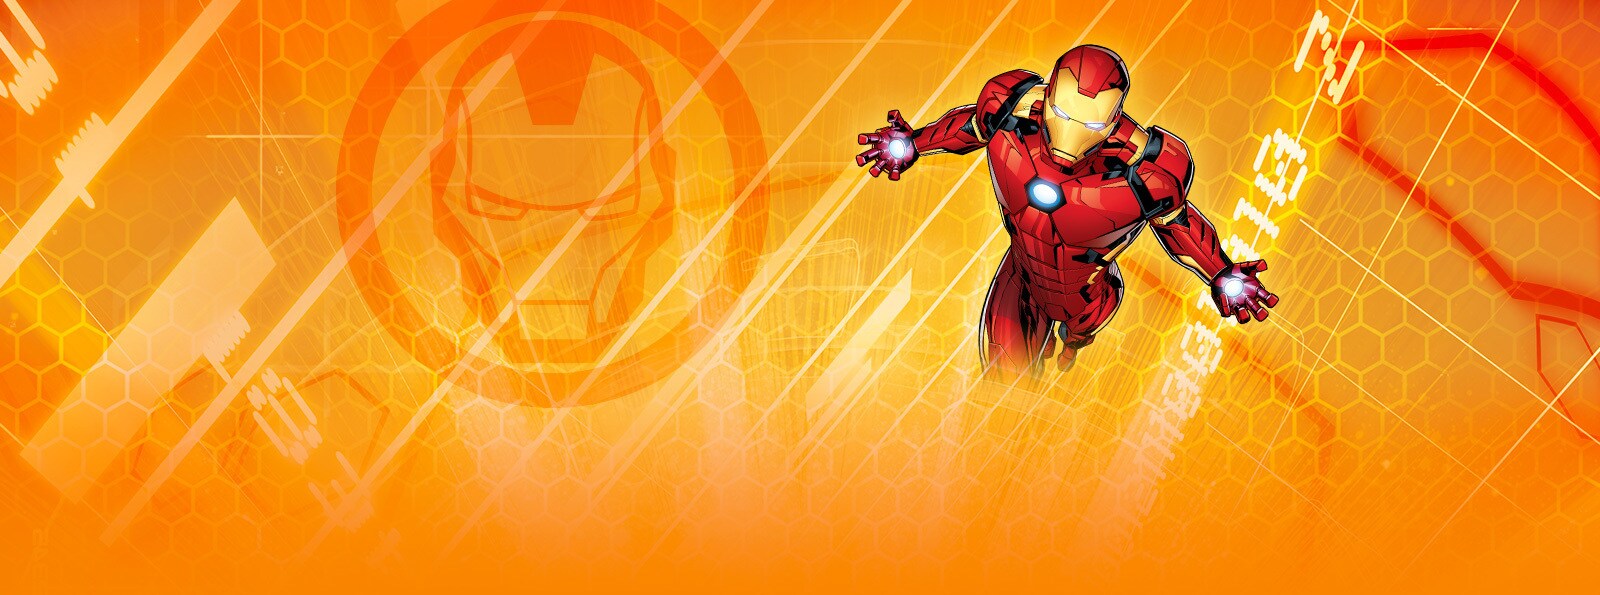 Iron Man | Avengers Characters | Marvel HQ